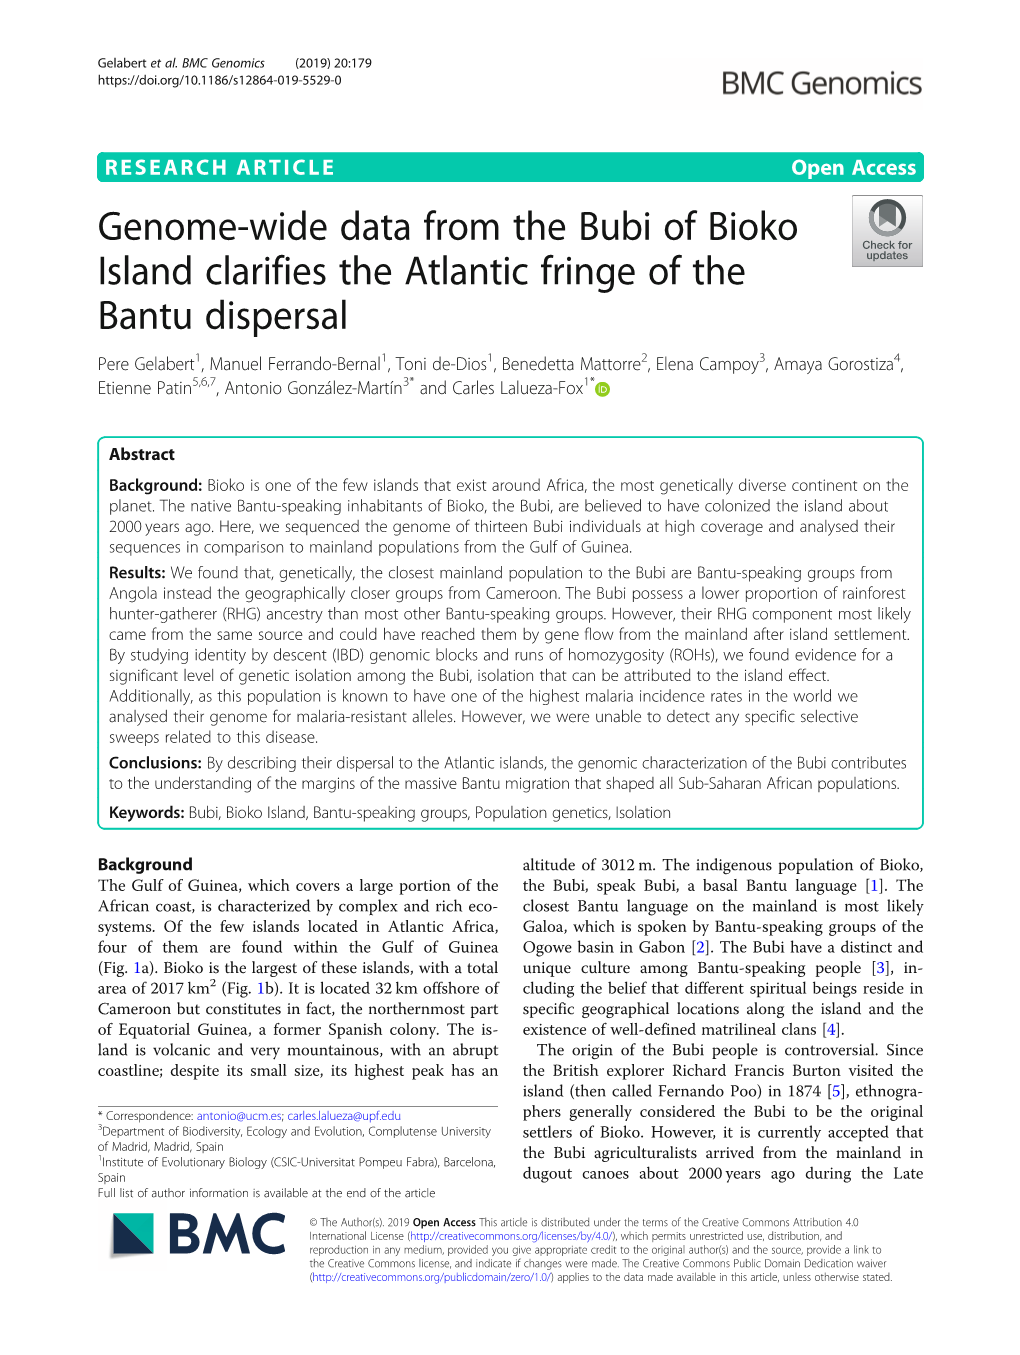 Genome-Wide Data from the Bubi of Bioko Island Clarifies the Atlantic